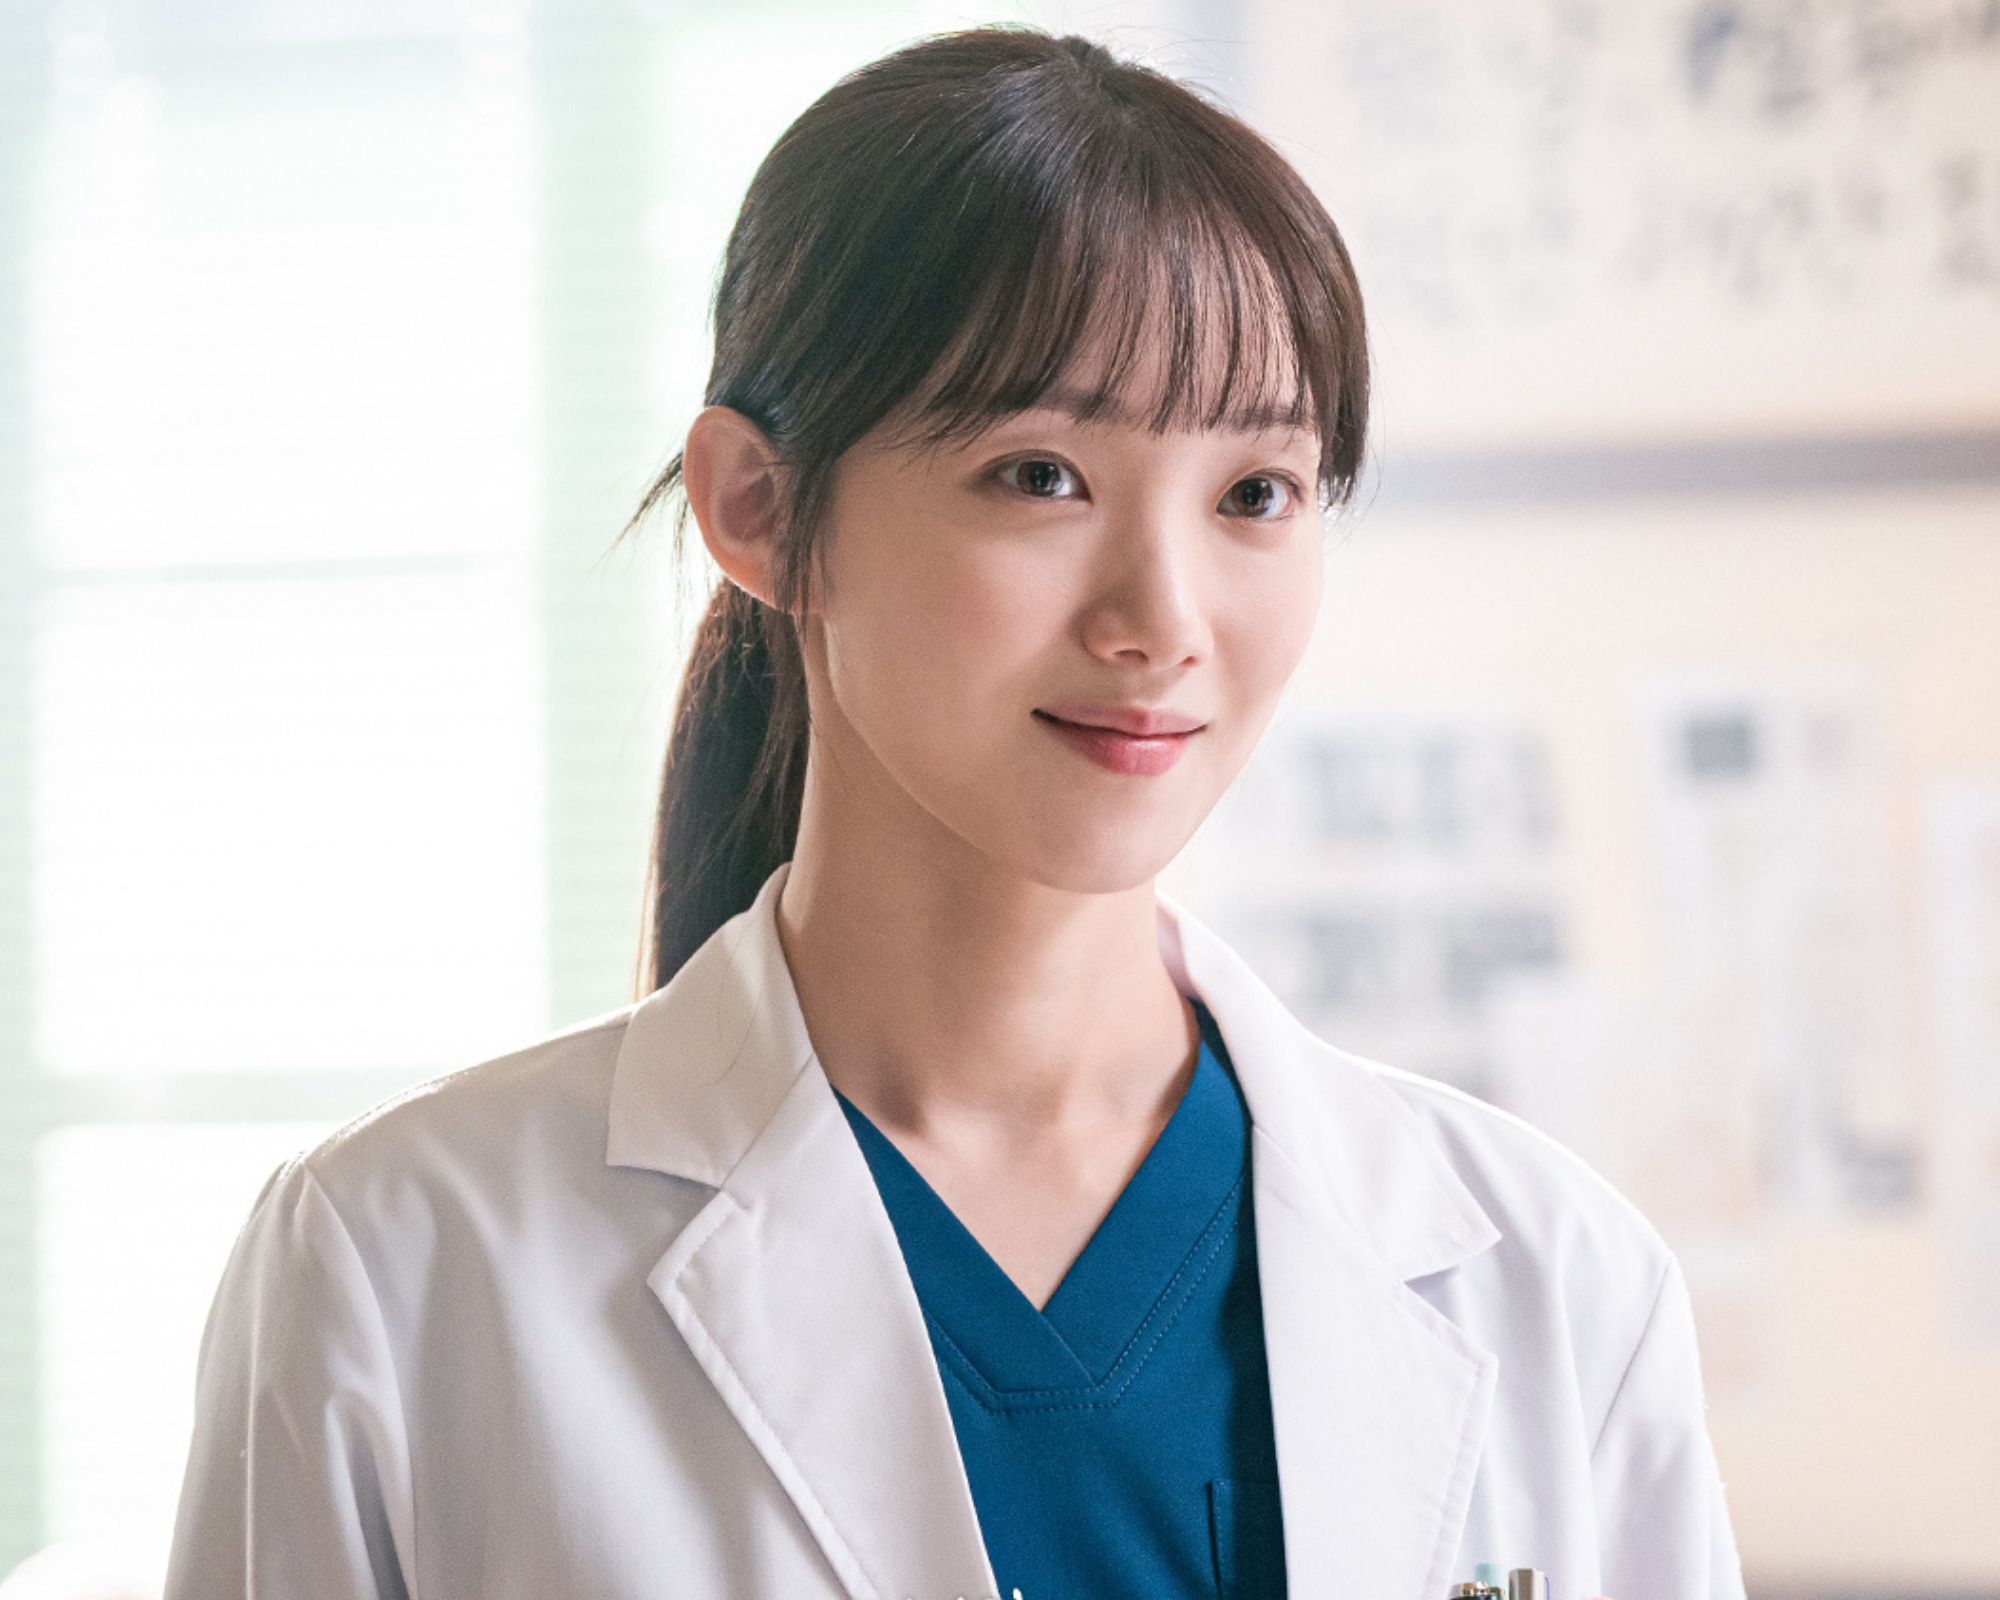 Dr. Romantic Season 3 - Full Review